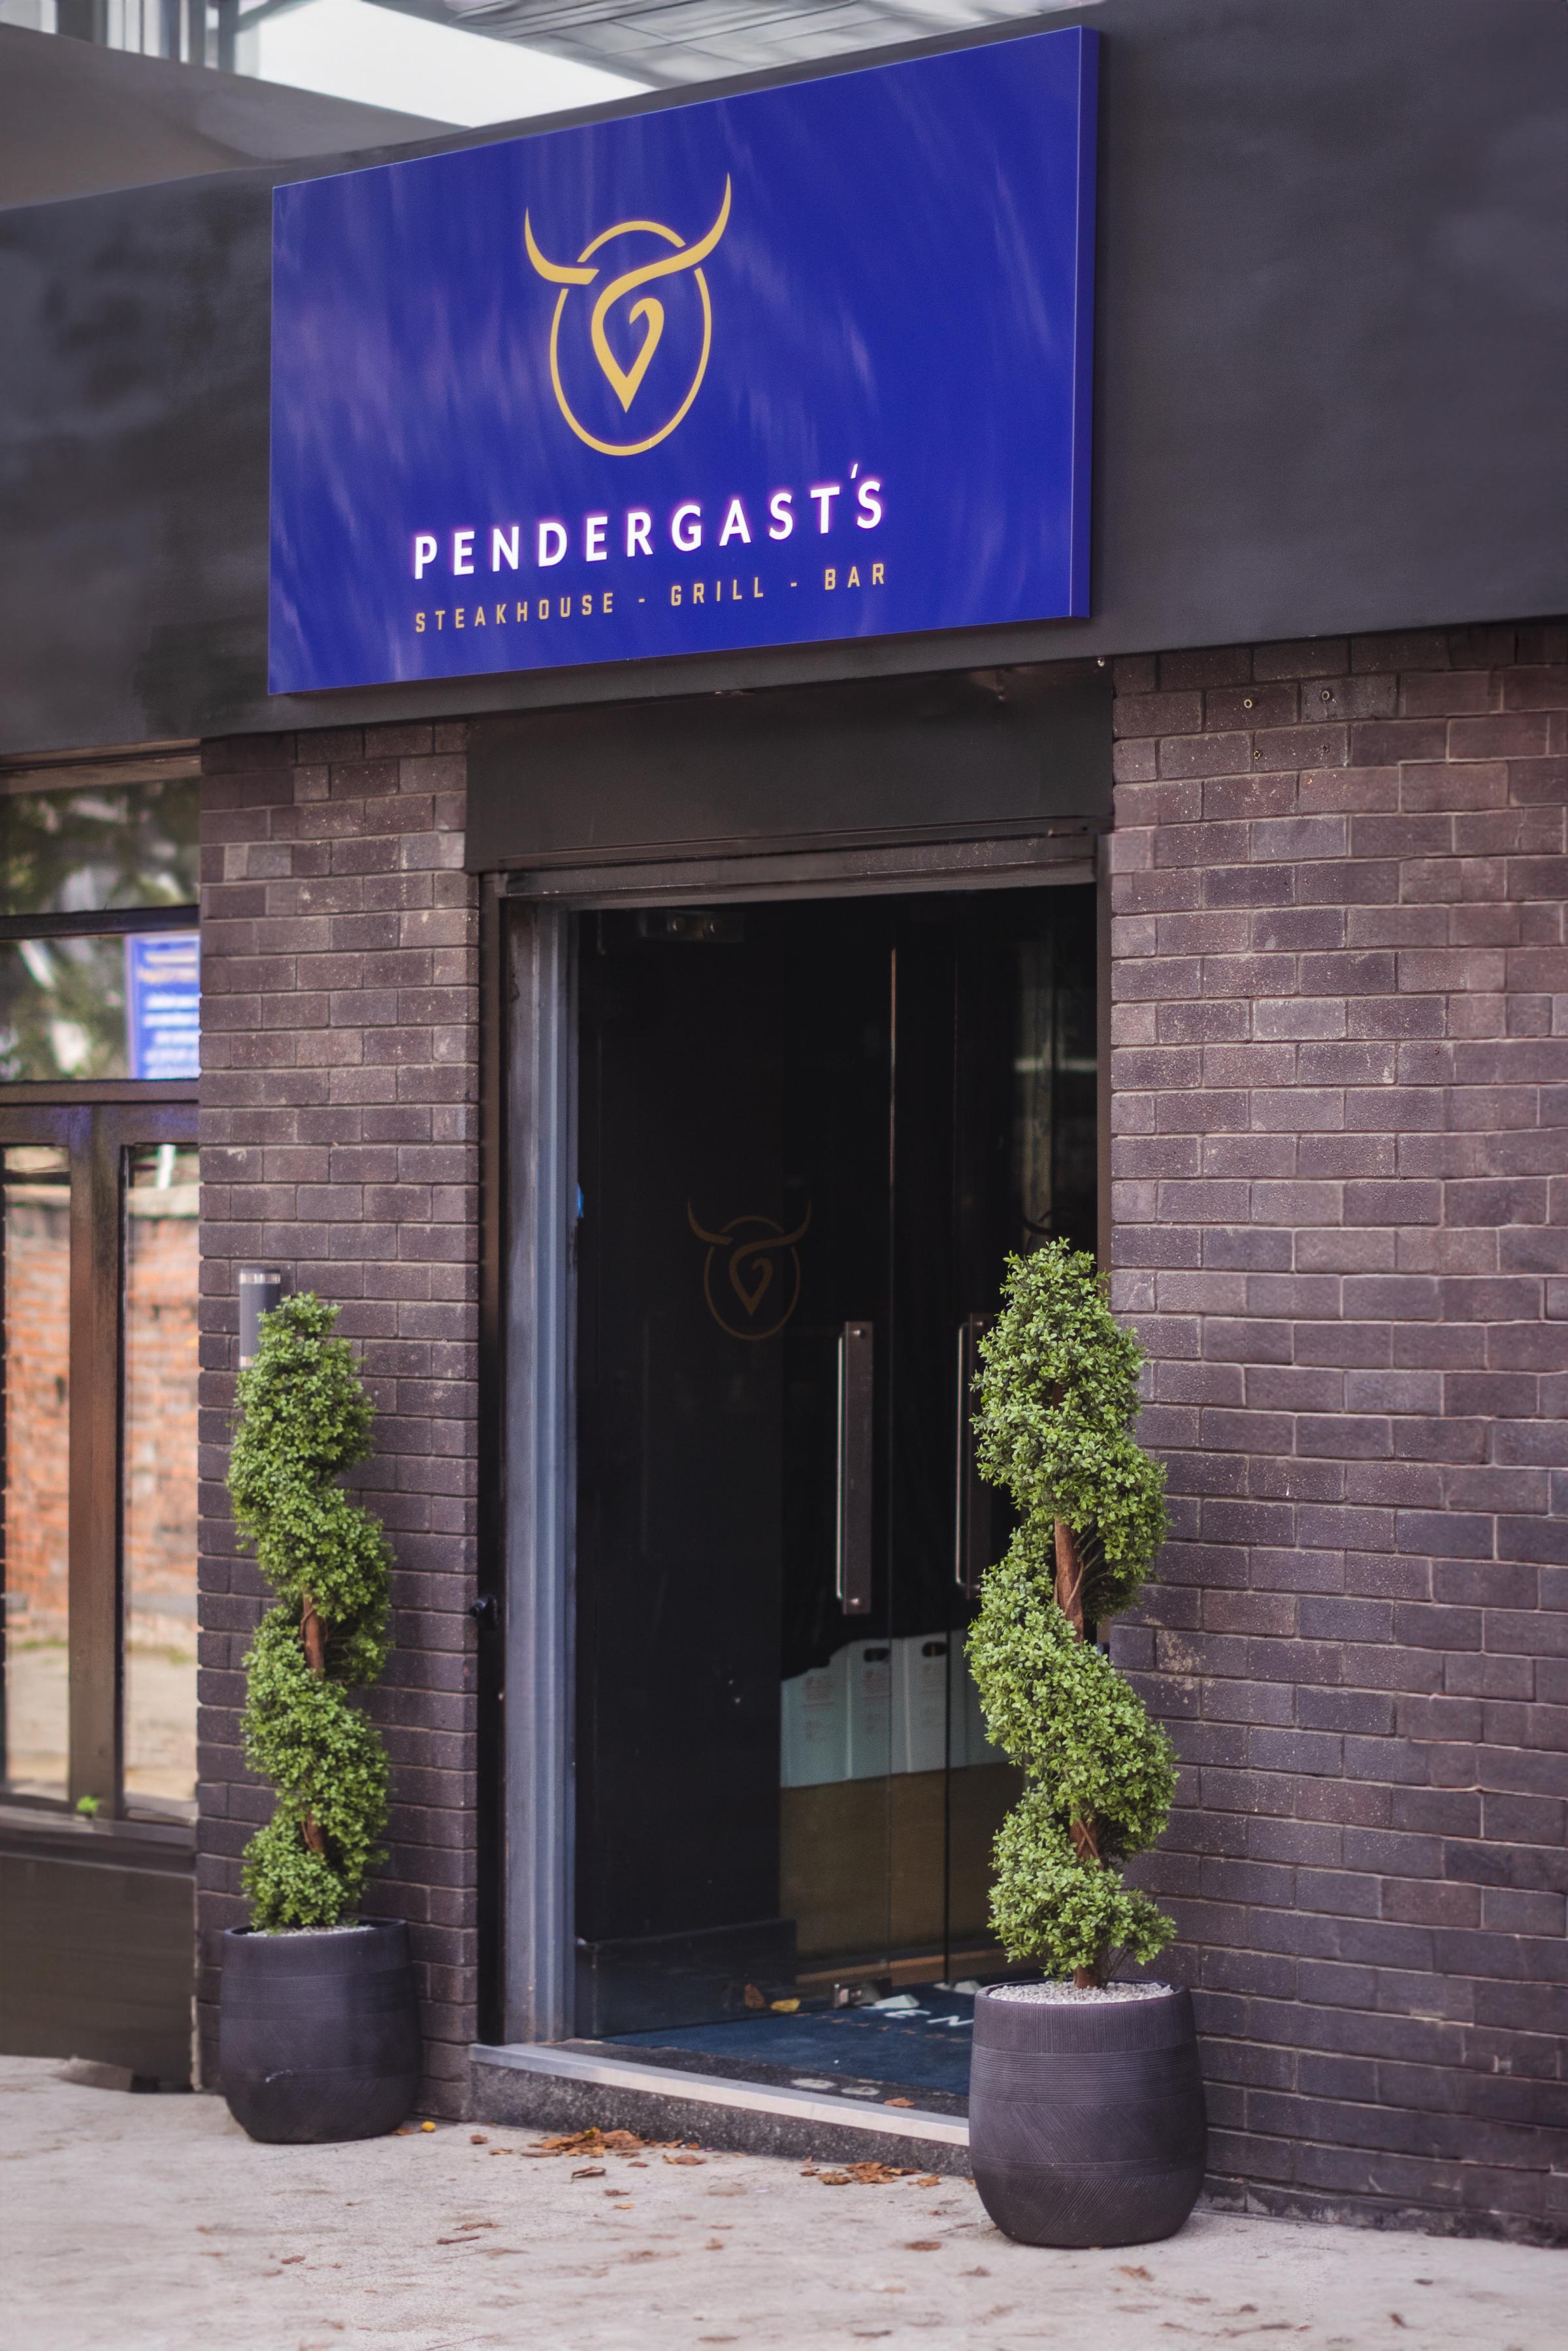 Pendergasts is on Cairo Street